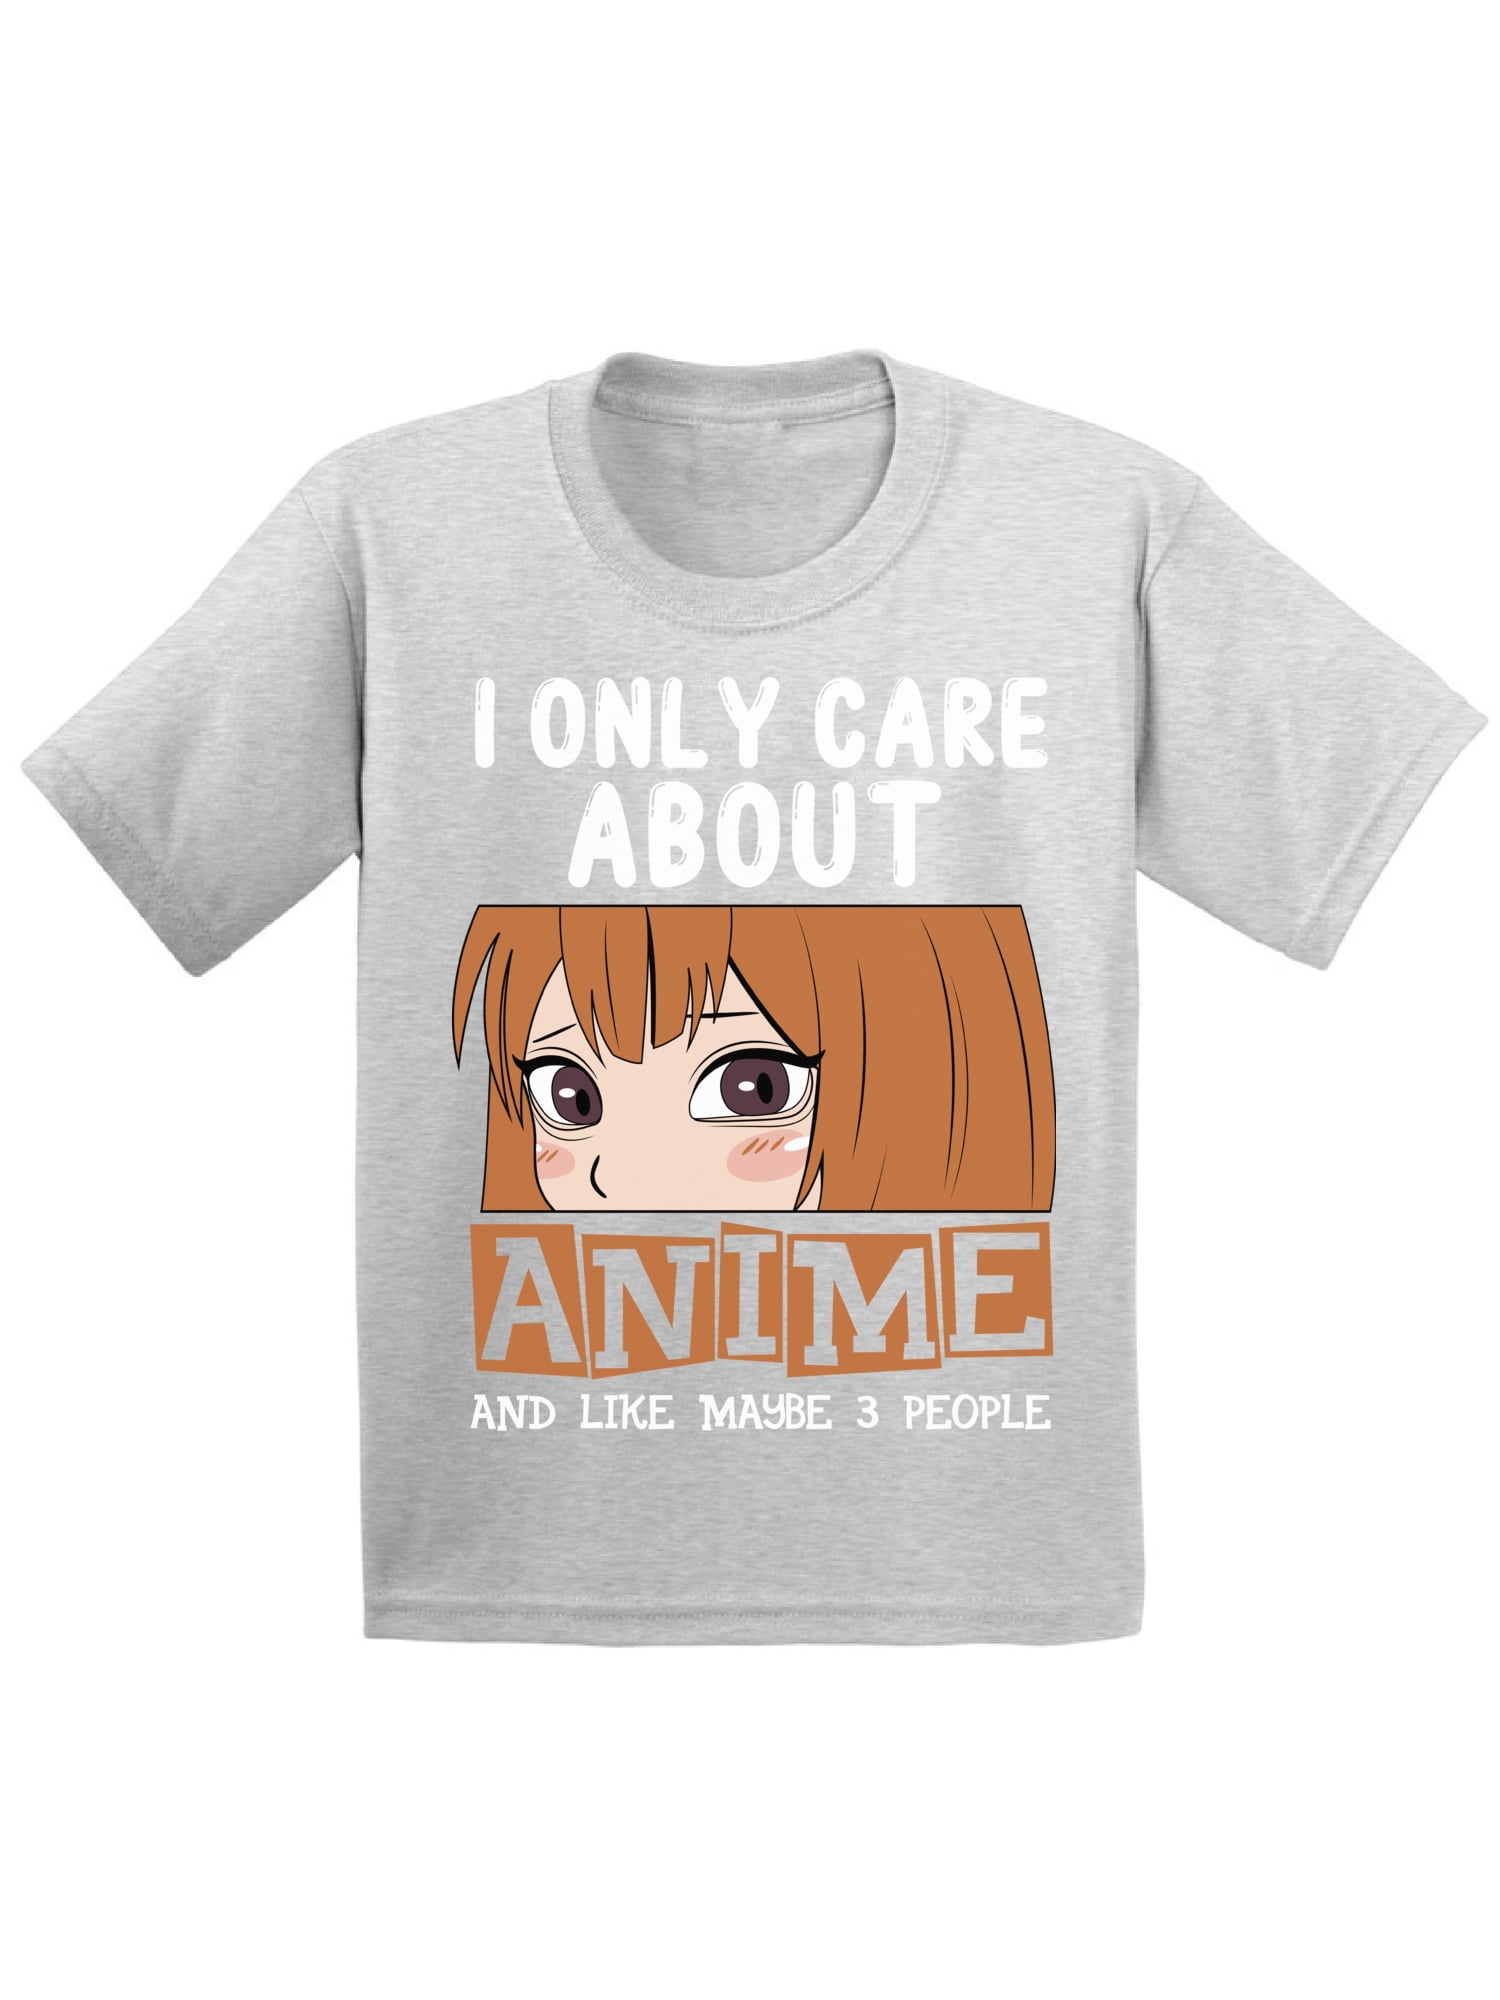 I Love Anime in Japanese 2-6 Years Old Boys & Girls Short-Sleeved Tshirt